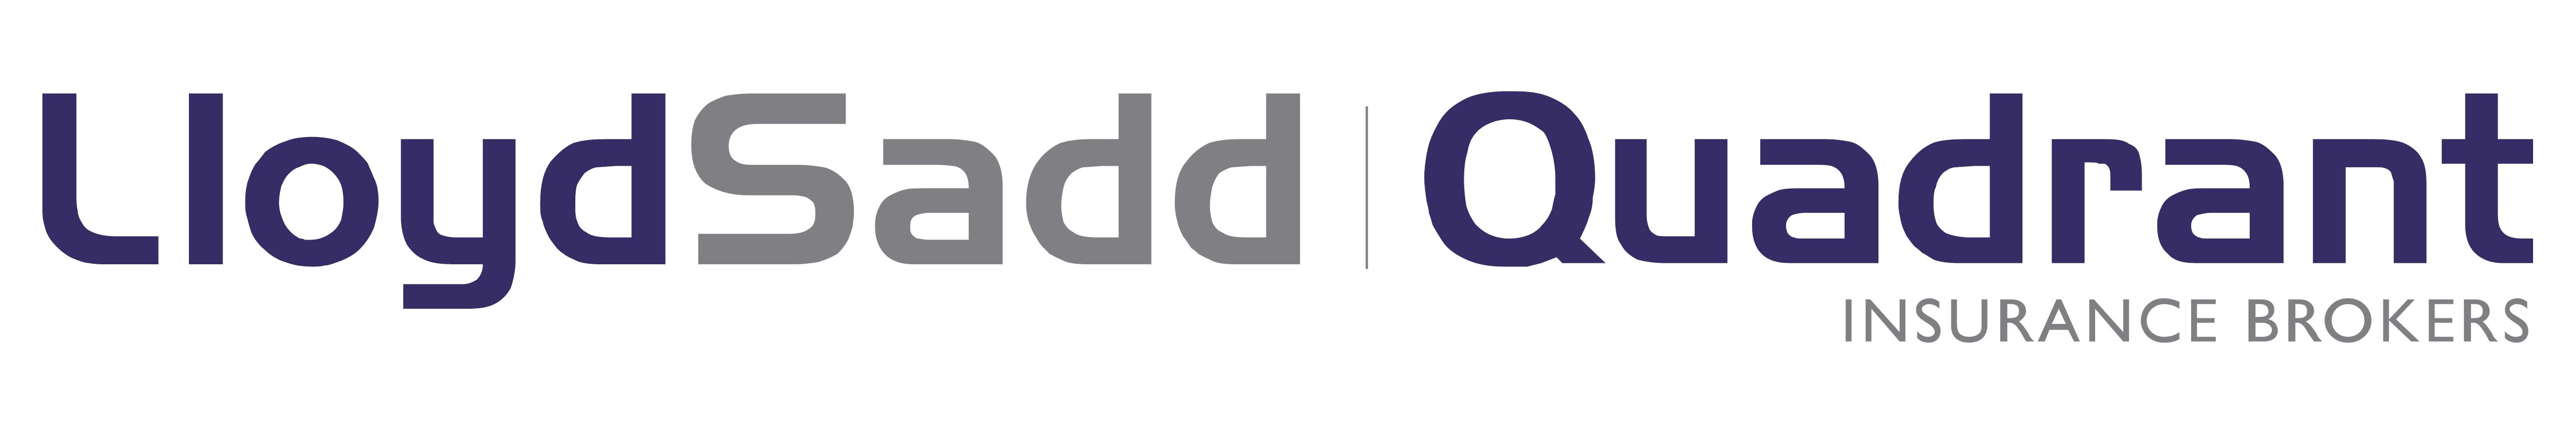 NEW Quadrant Logo 2015